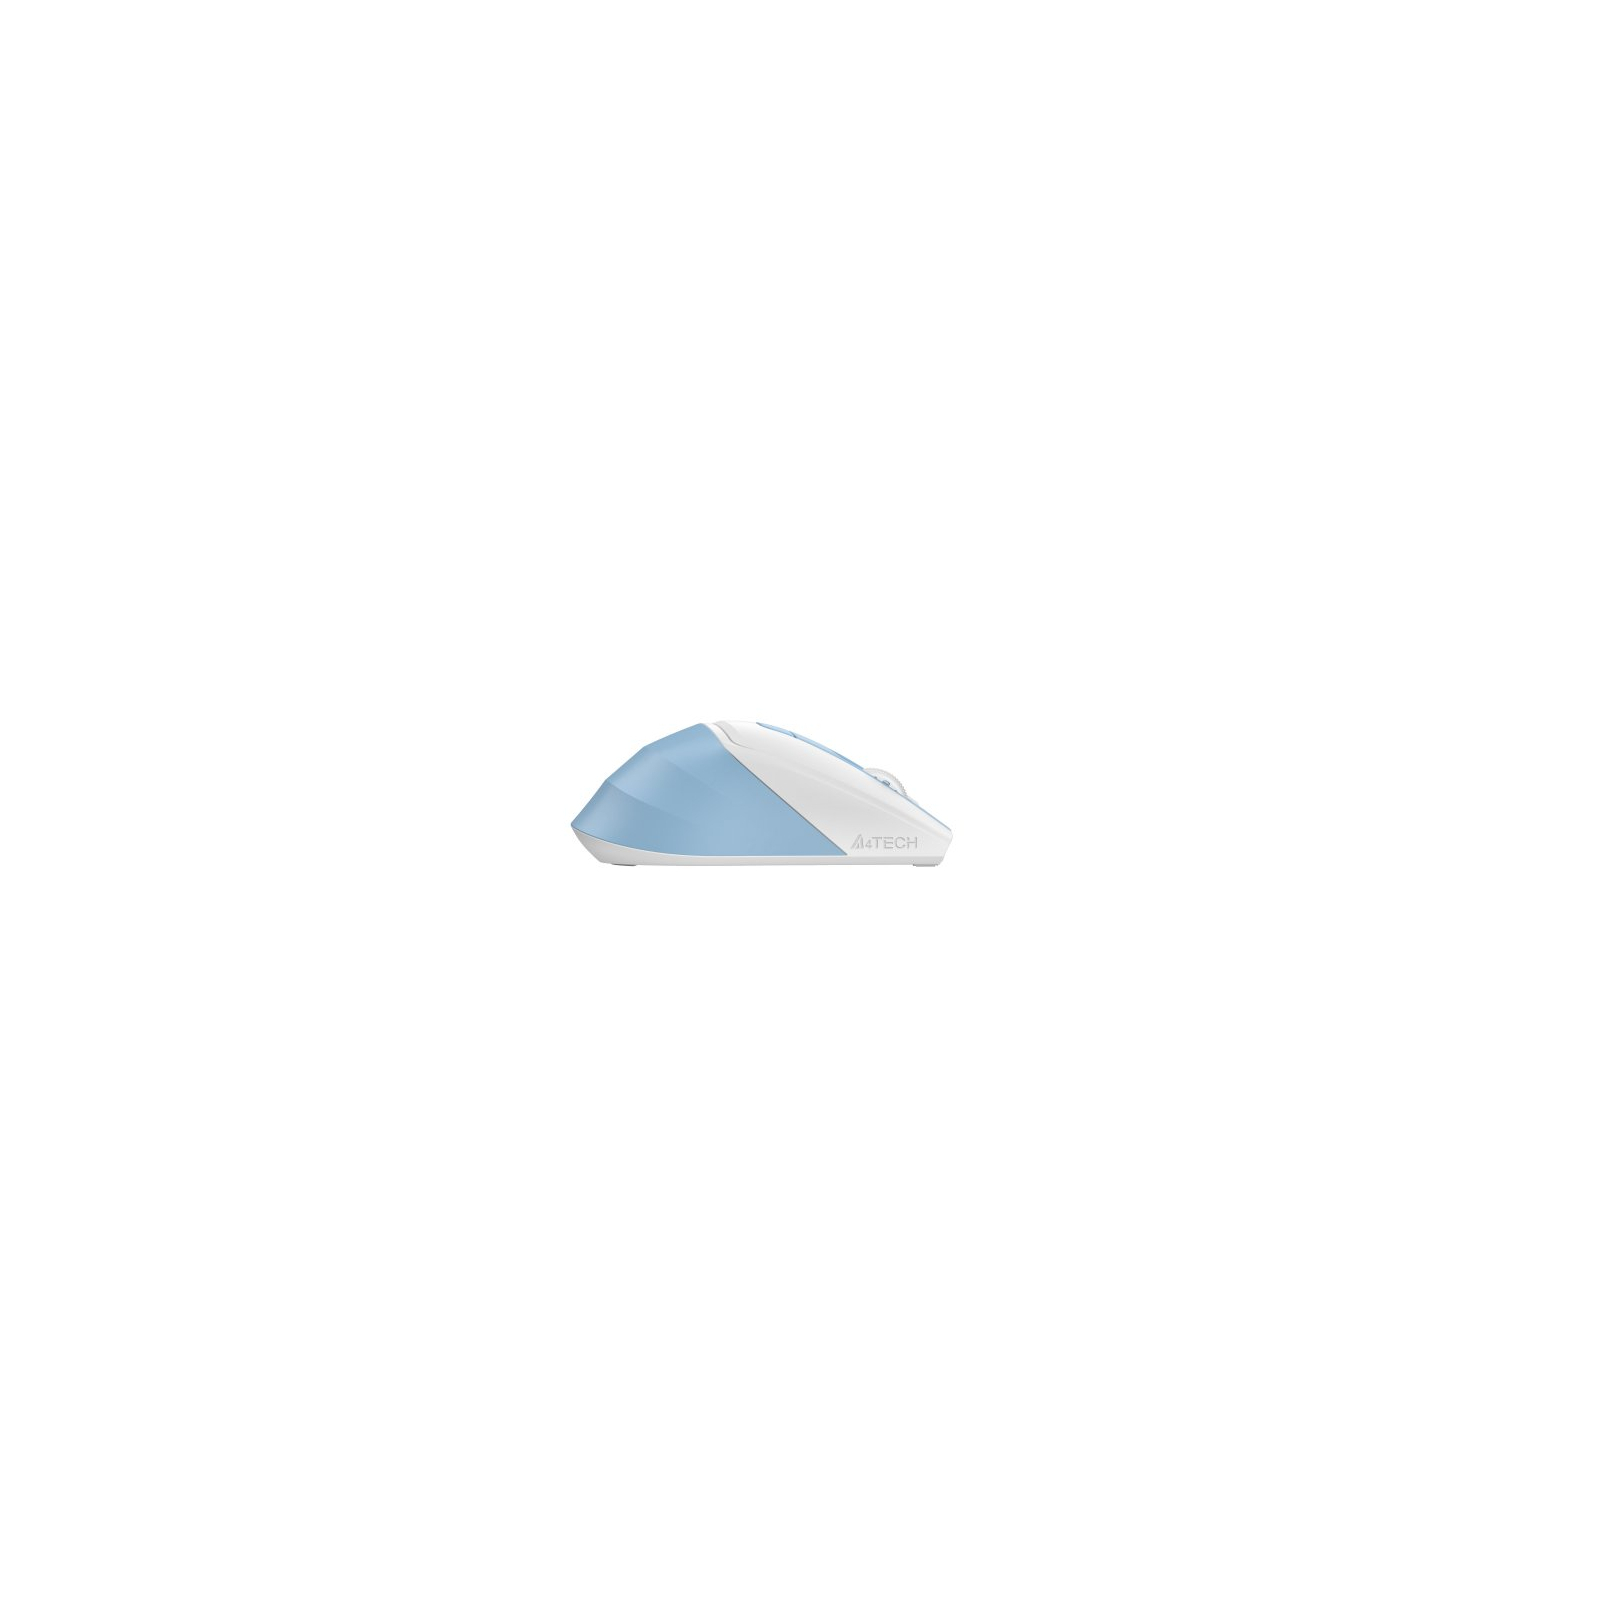 Мышка A4Tech FG45CS Air Wireless lcy Blue (4711421993210) изображение 5